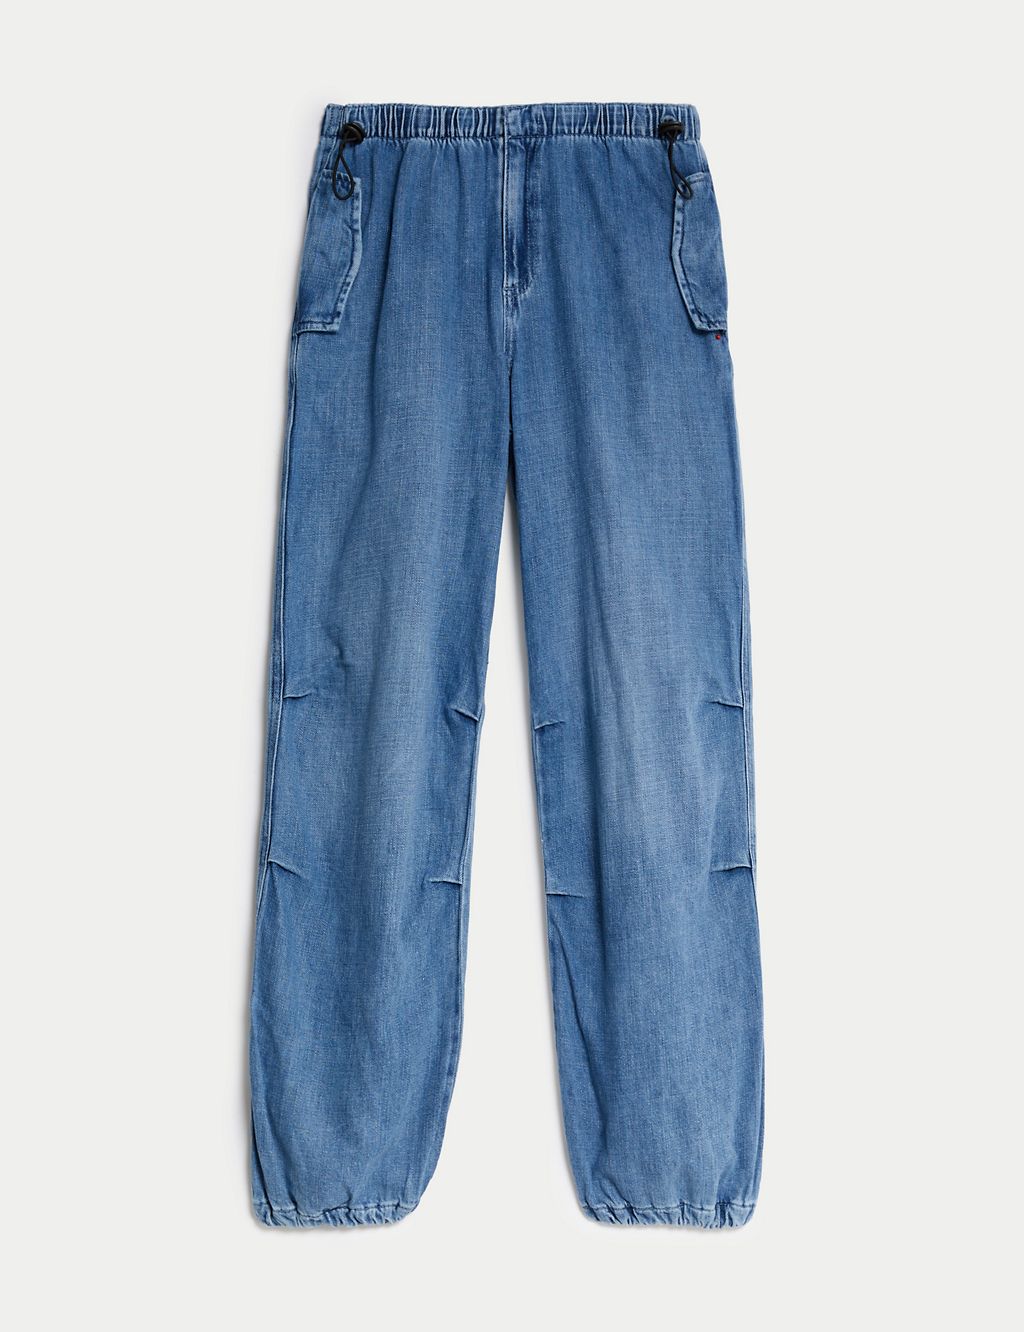 Denim Parachute Trousers (6-16 Yrs) | M&S Collection | M&S